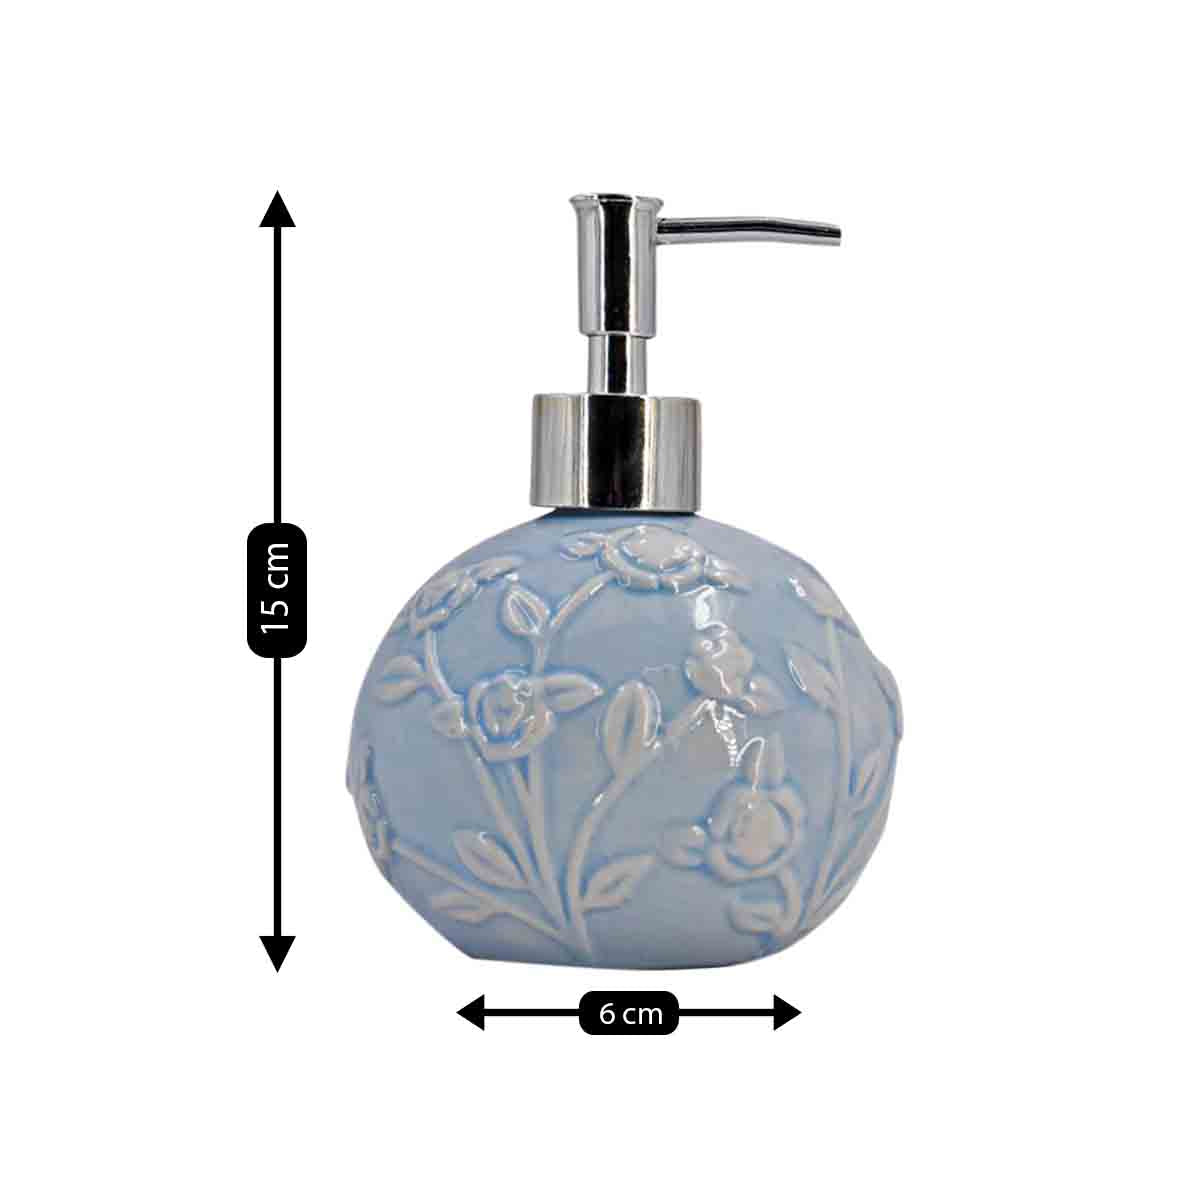 Ceramic Soap Dispenser Pump for Bathroom for Bath Gel, Lotion, Shampoo (8016)